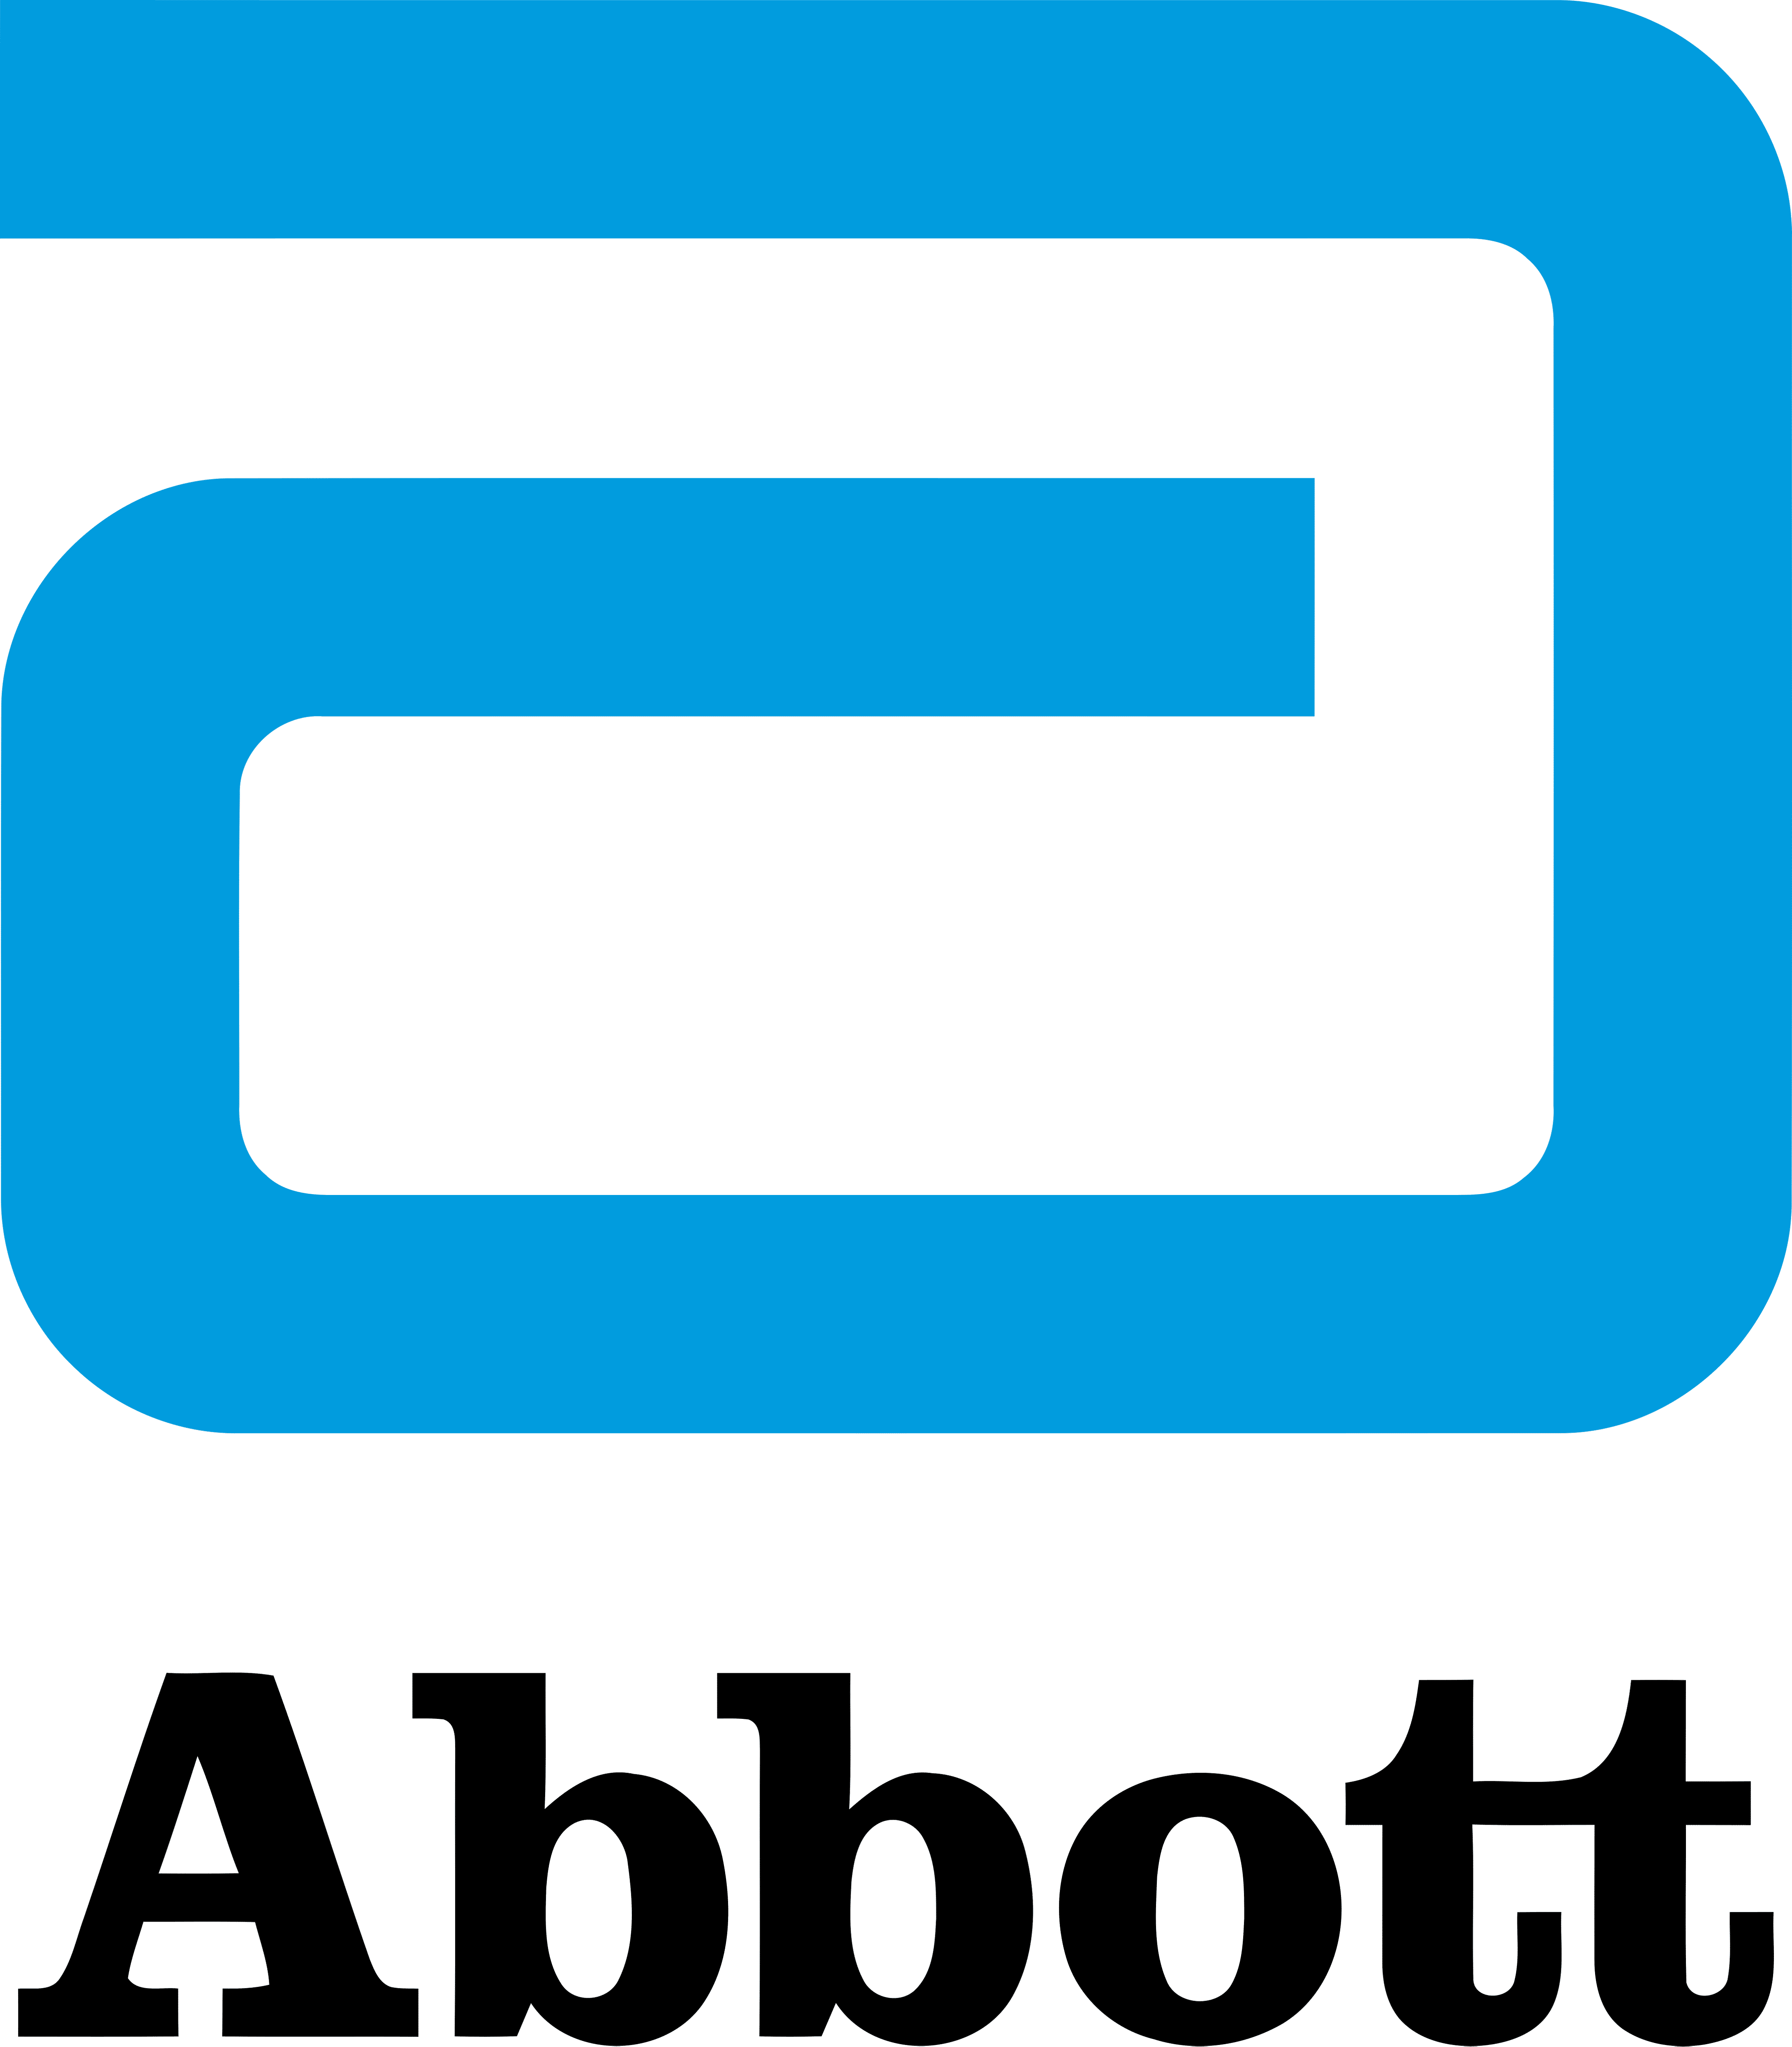 The abbott logo on a green background.